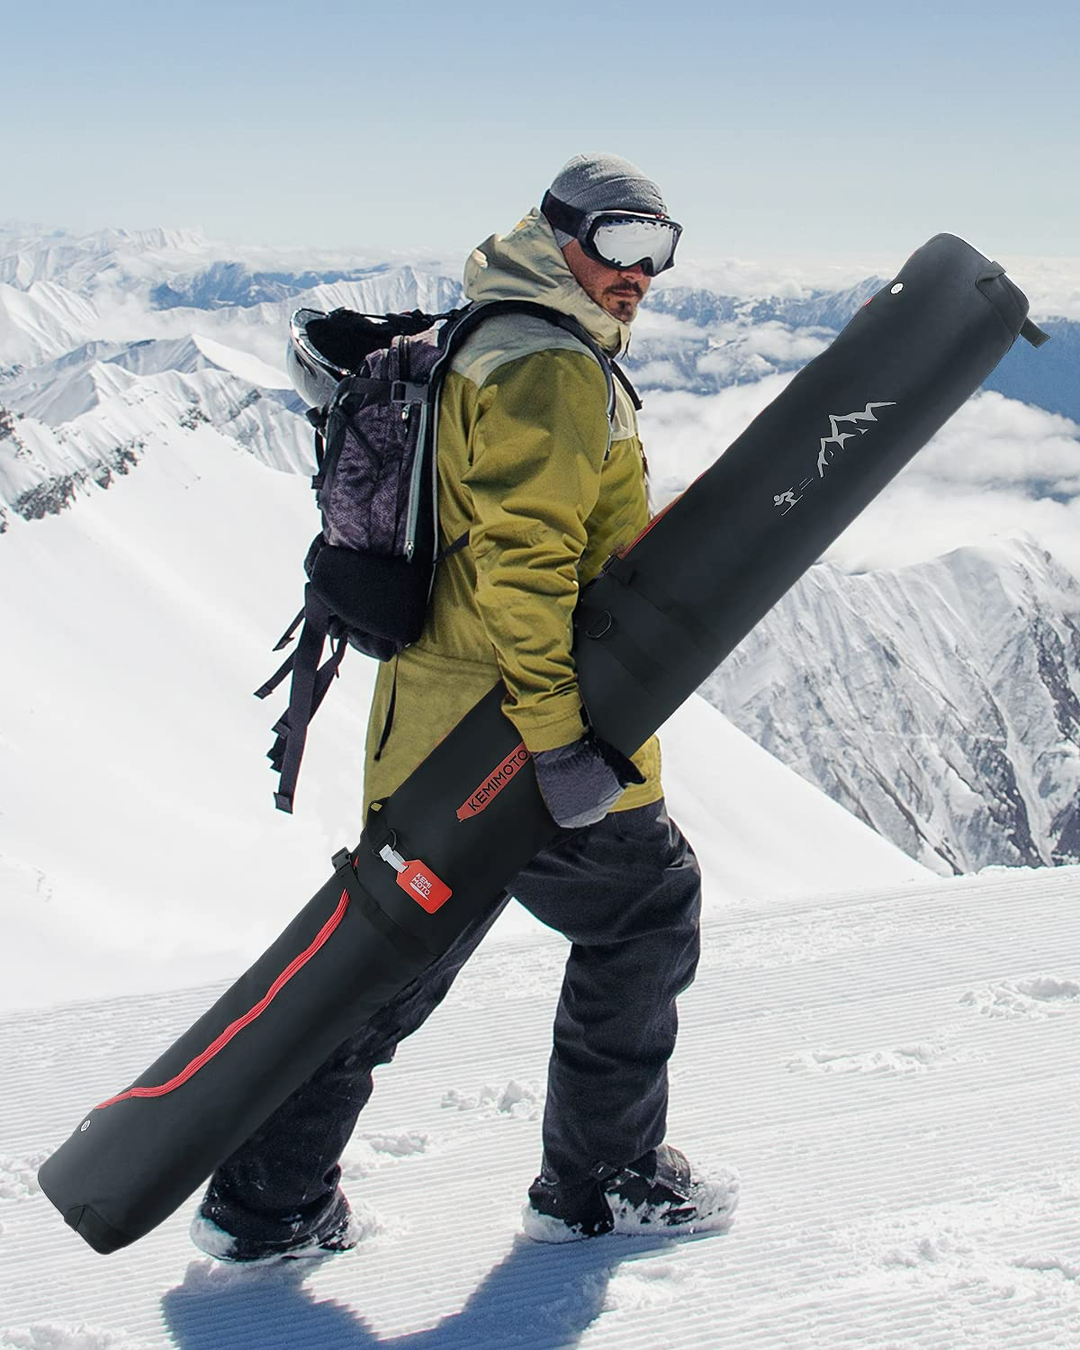 Snowboard Bag ＆ Boot Bags Combo - Kemimoto